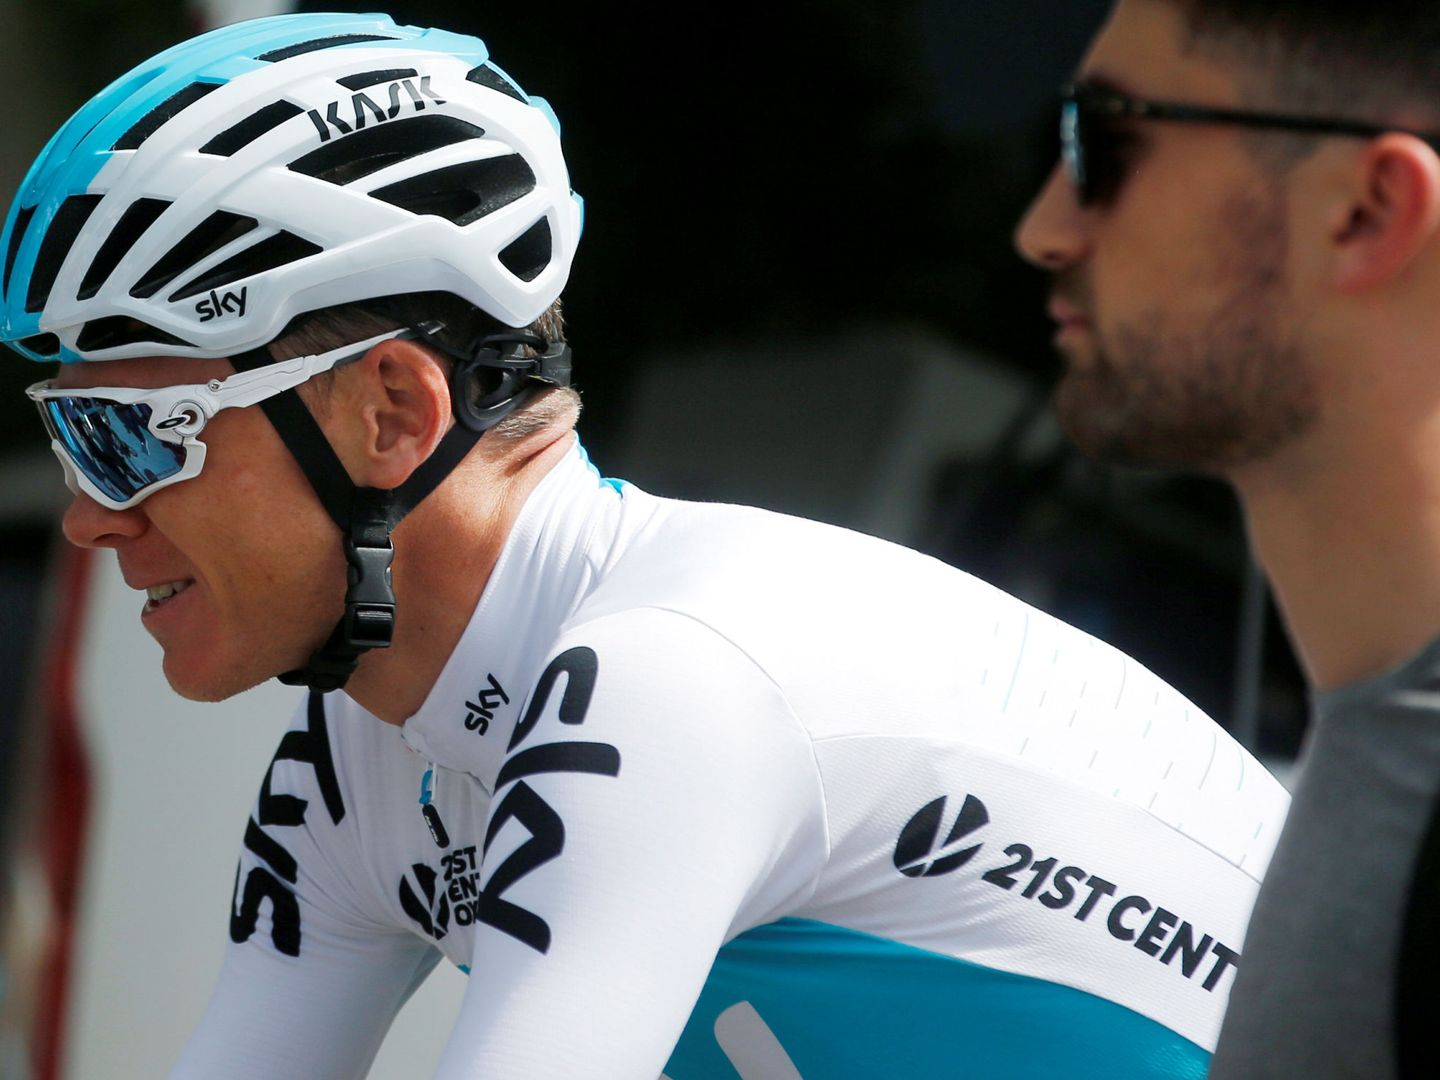 Chris Froome busca la triple corona si gana el Giro de Italia 2018. (Reuters)